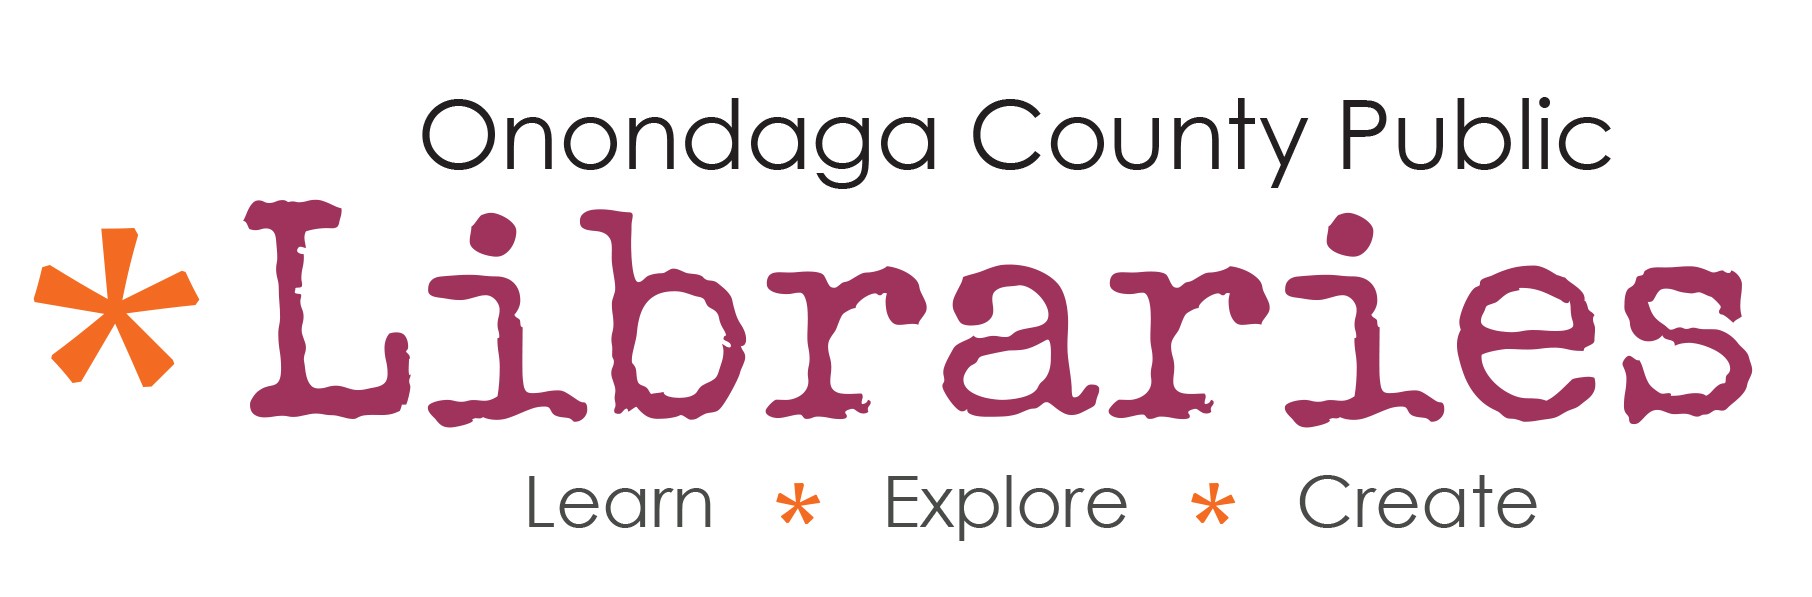 Onondaga County Public Libraries | LinkedIn